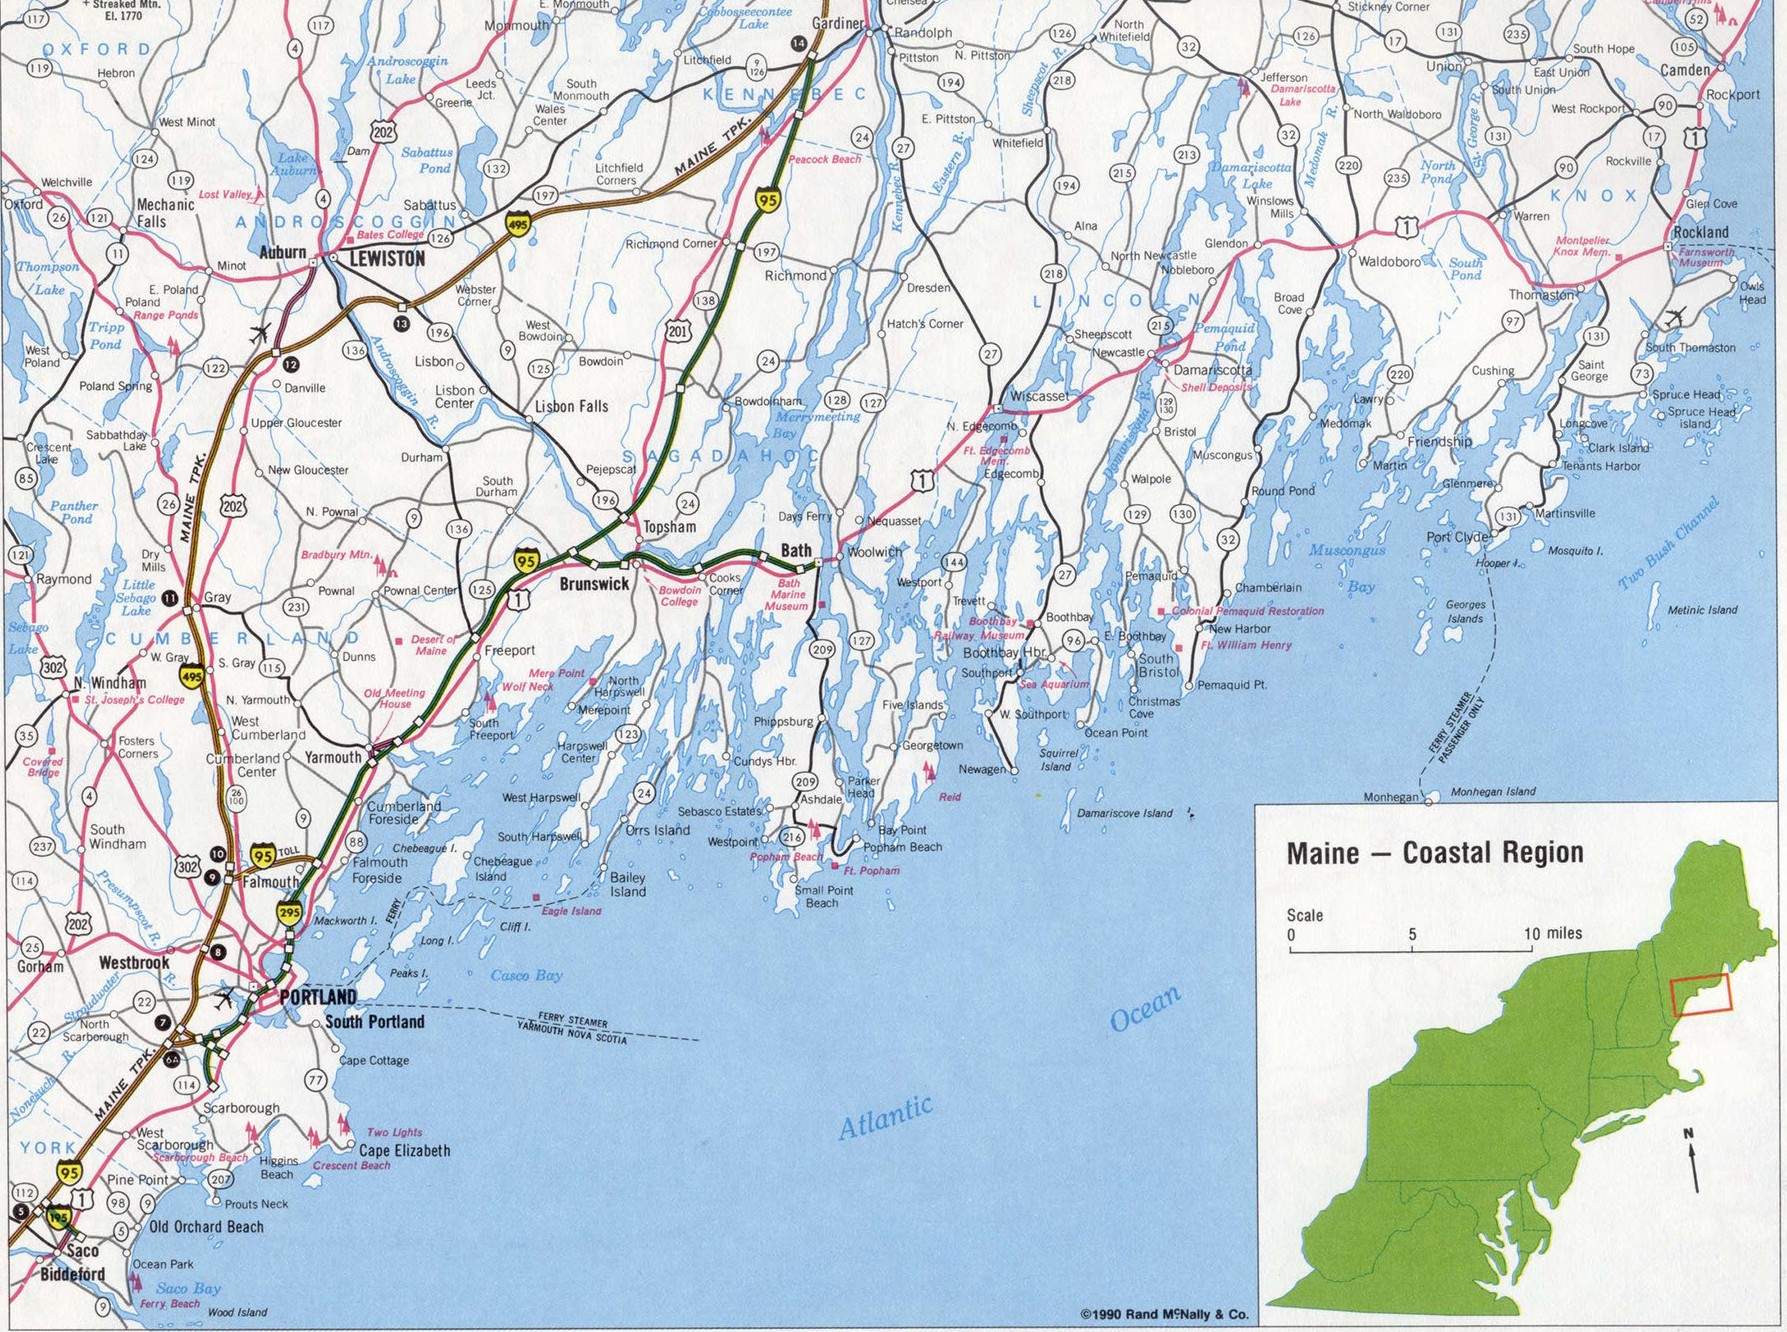 Coastal region Maine state map